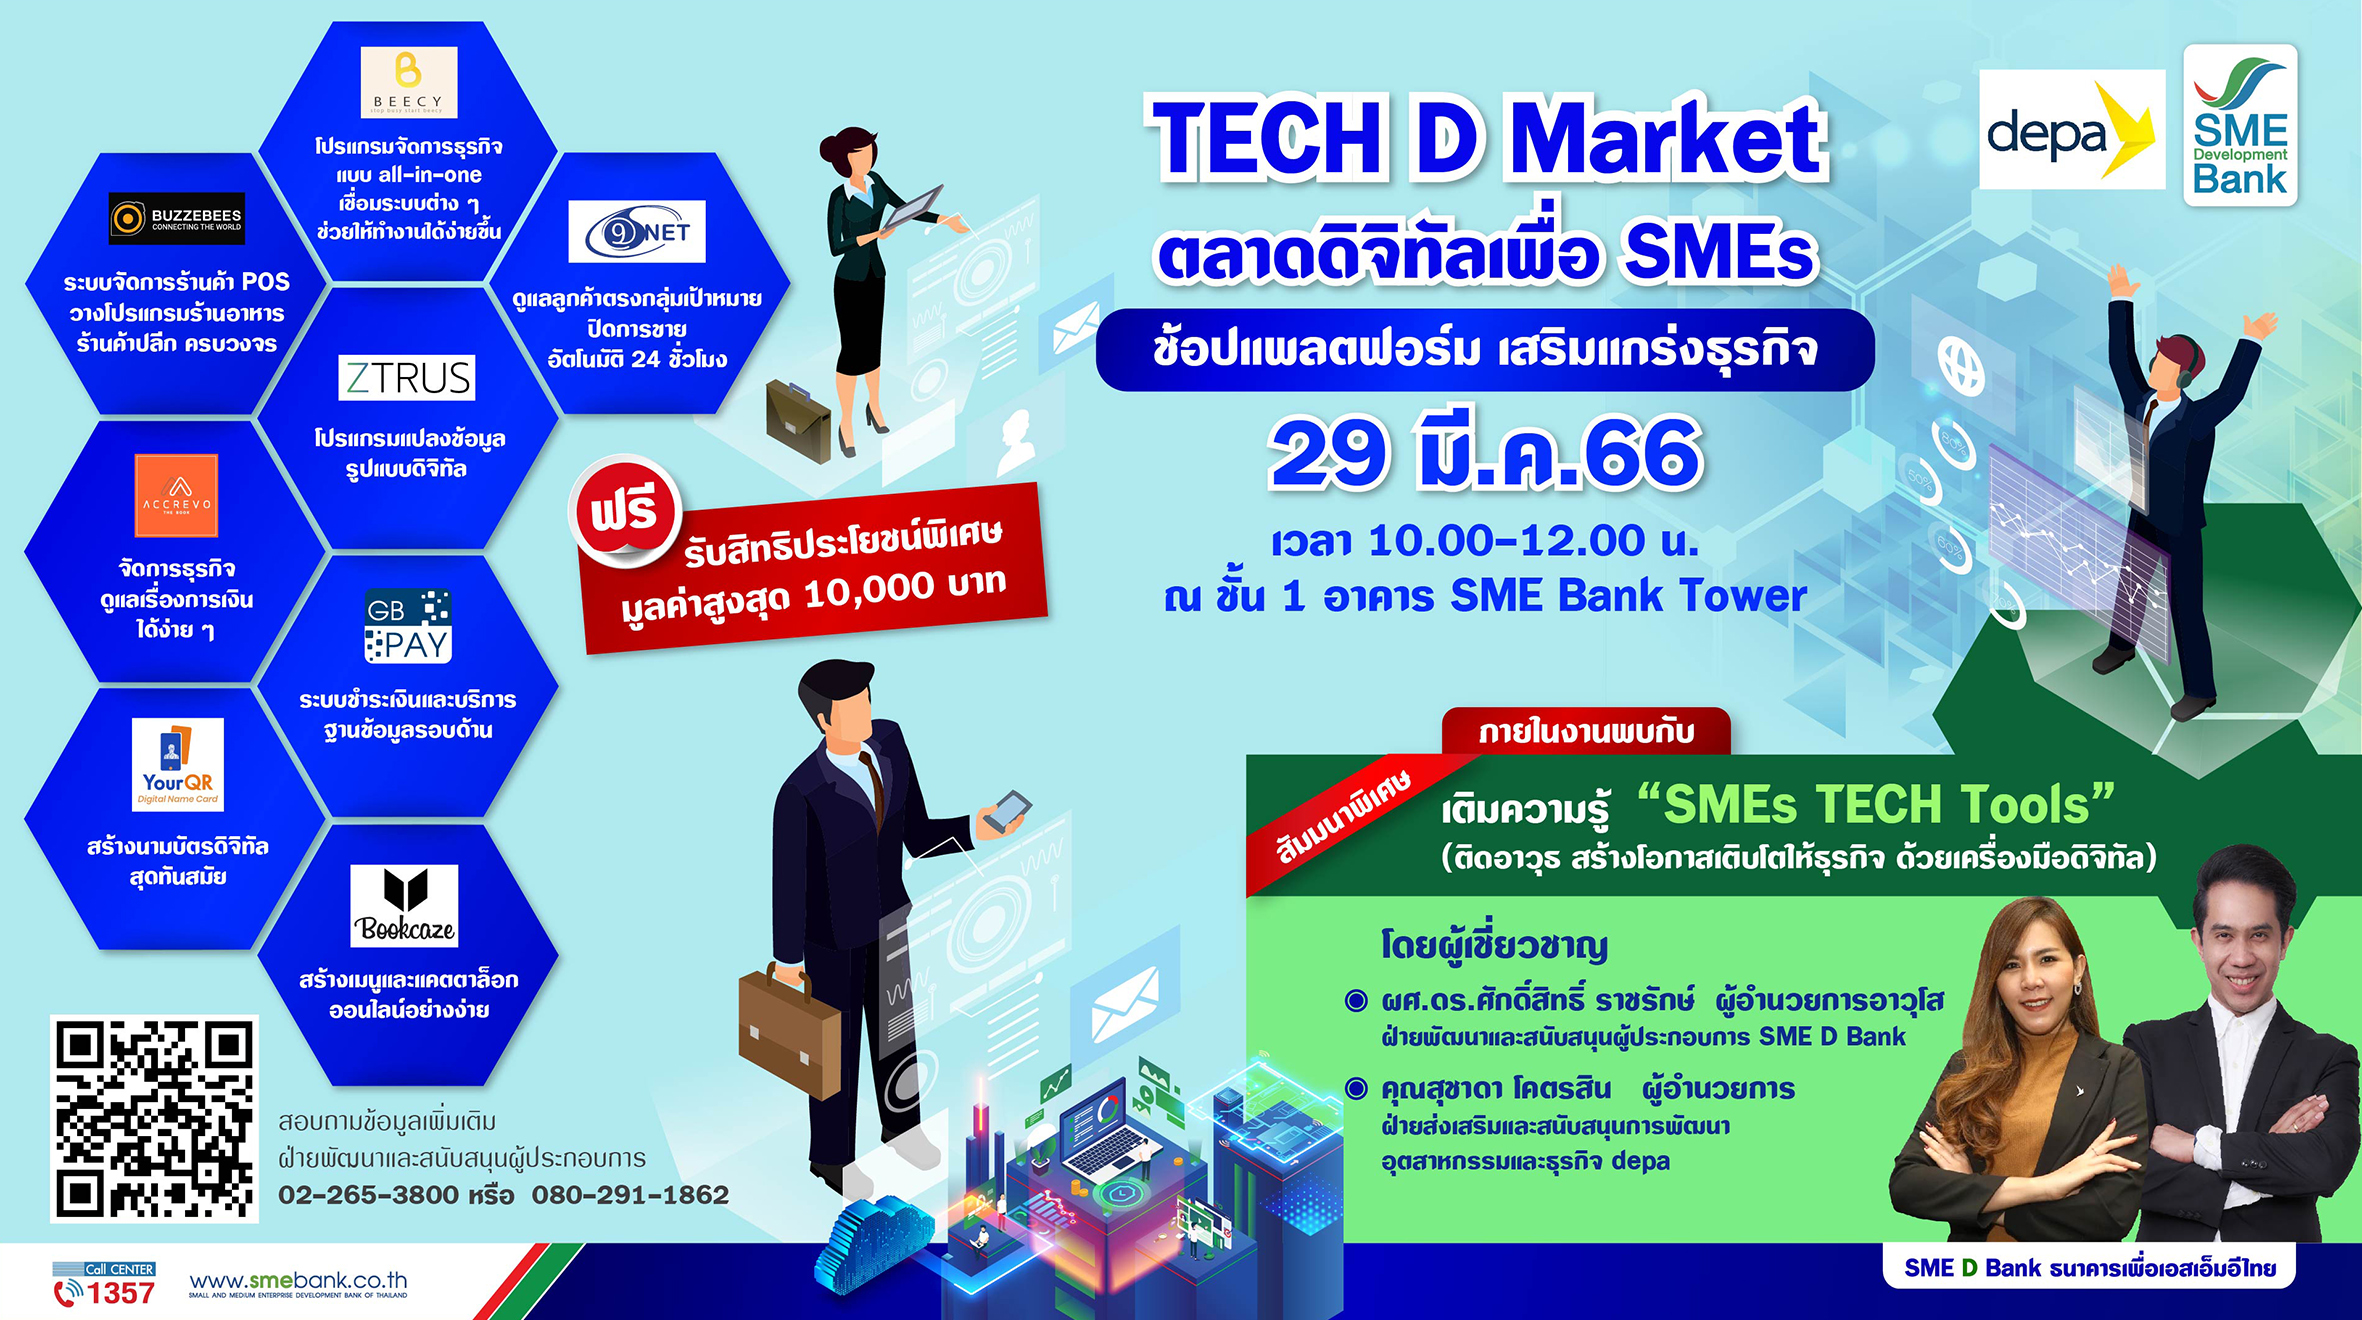 SME D Bank – depa เปิดตลาด ‘TECH D Market’ เชิญช้อปแพลตฟอร์มสุดปัง! พร้อมรับฟังสัมมนา ‘SMEs TECH Tools’ ติดอาวุธธุรกิจด้วยดิจิทัล 29 มี.ค.66